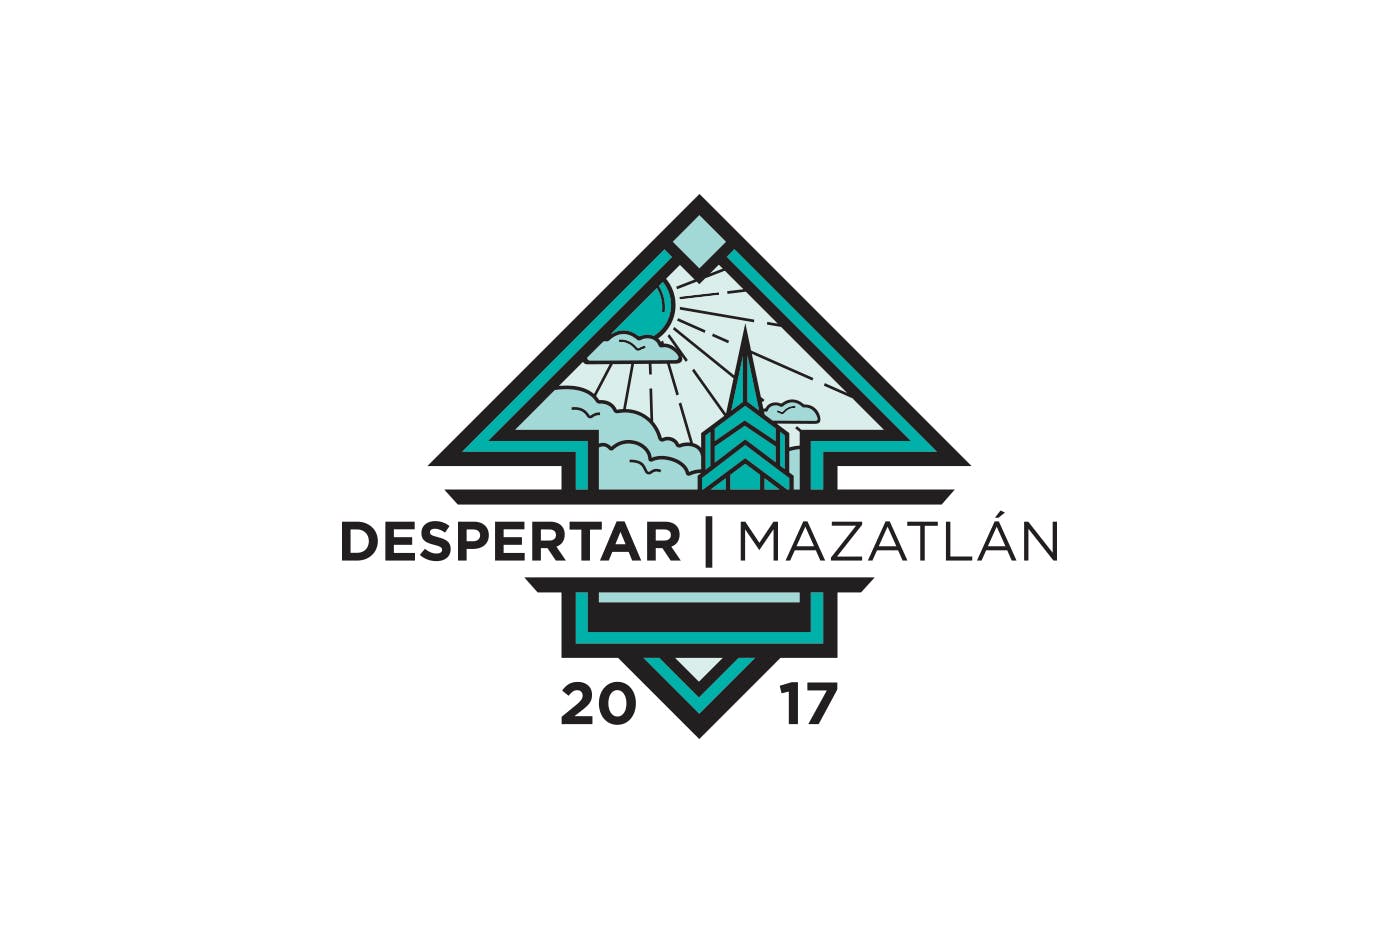 Despertar Mazatlan 2017 logo